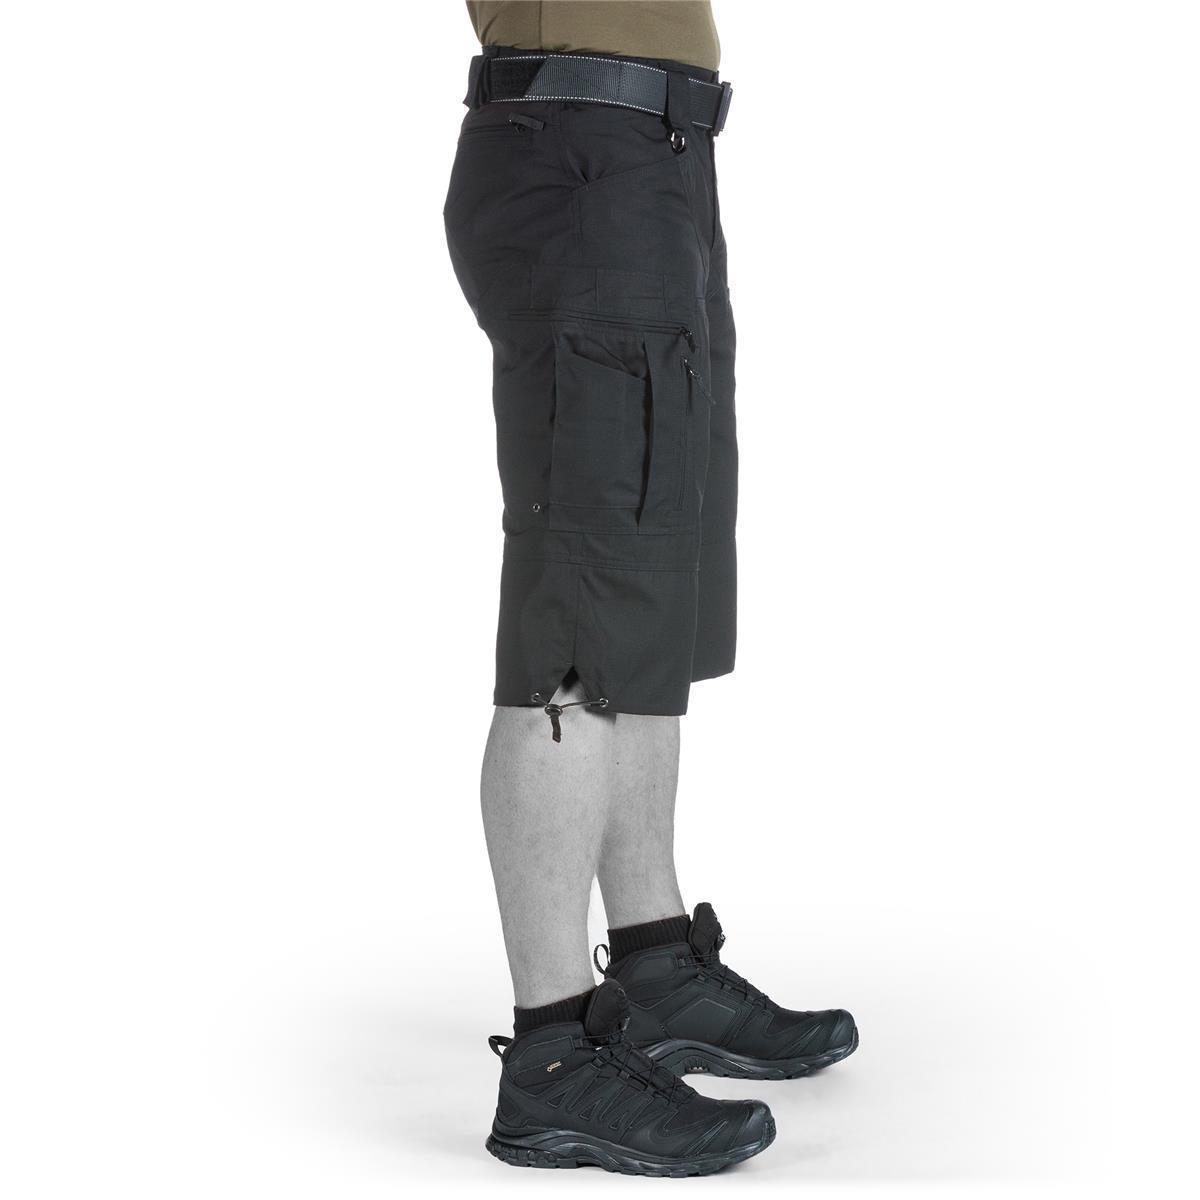 UF PRO P-40 Tactical Shorts